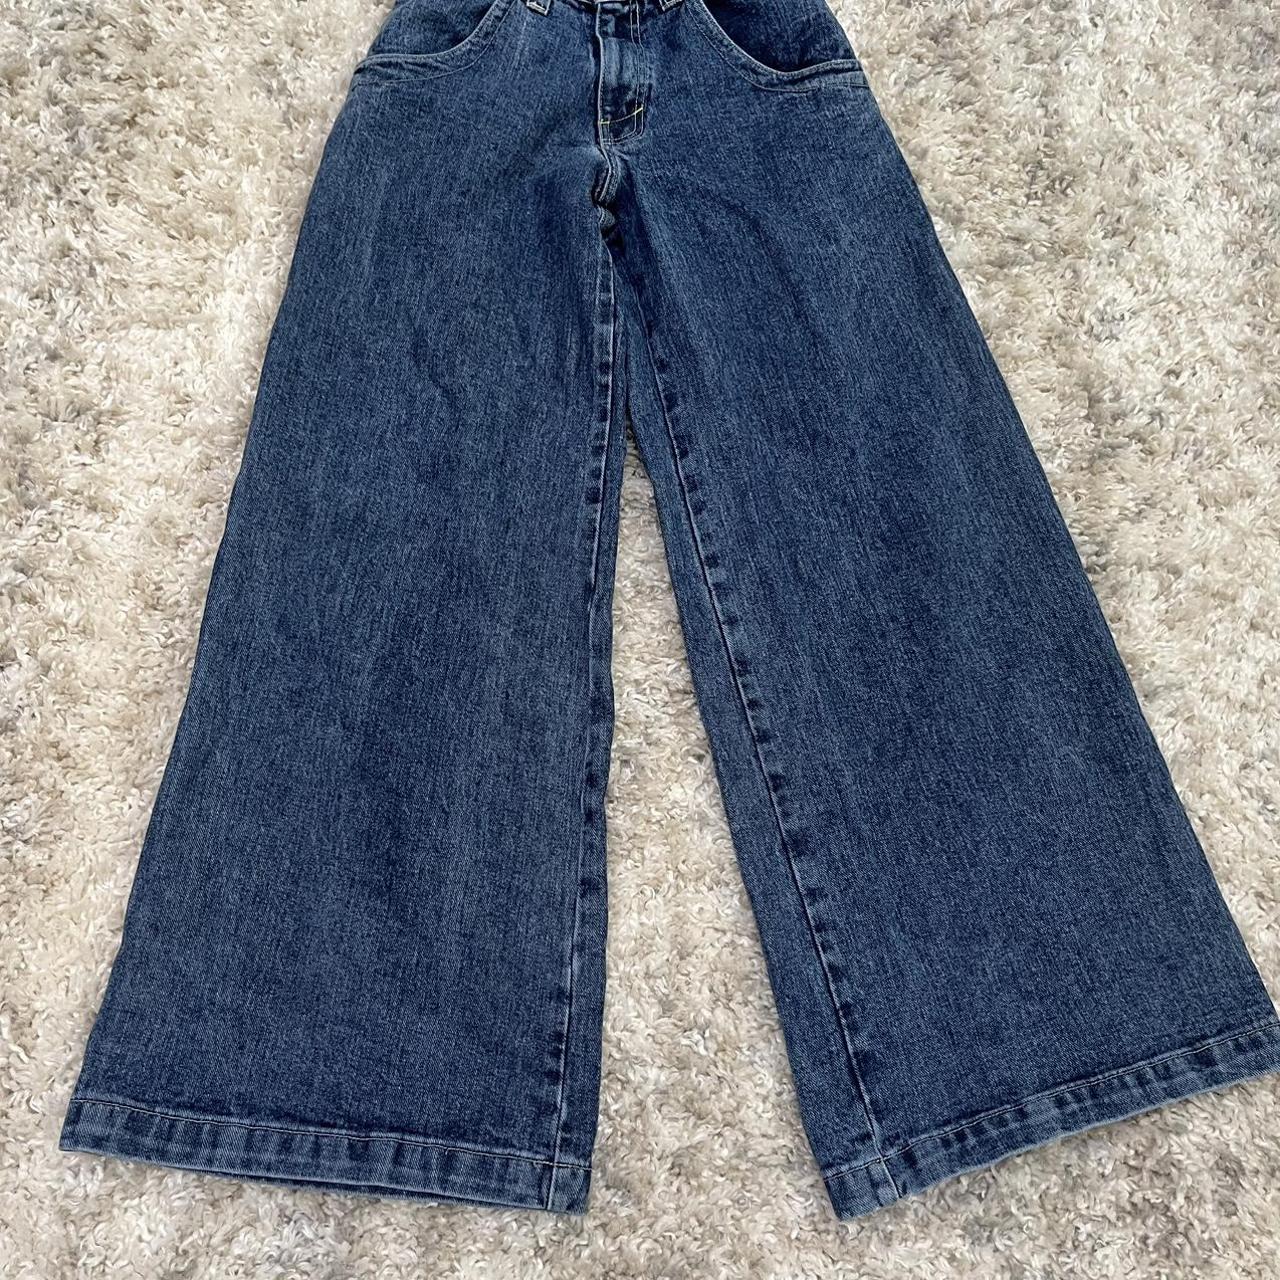 Size 28 jnco jeans embroidered big pockets #jnco... - Depop